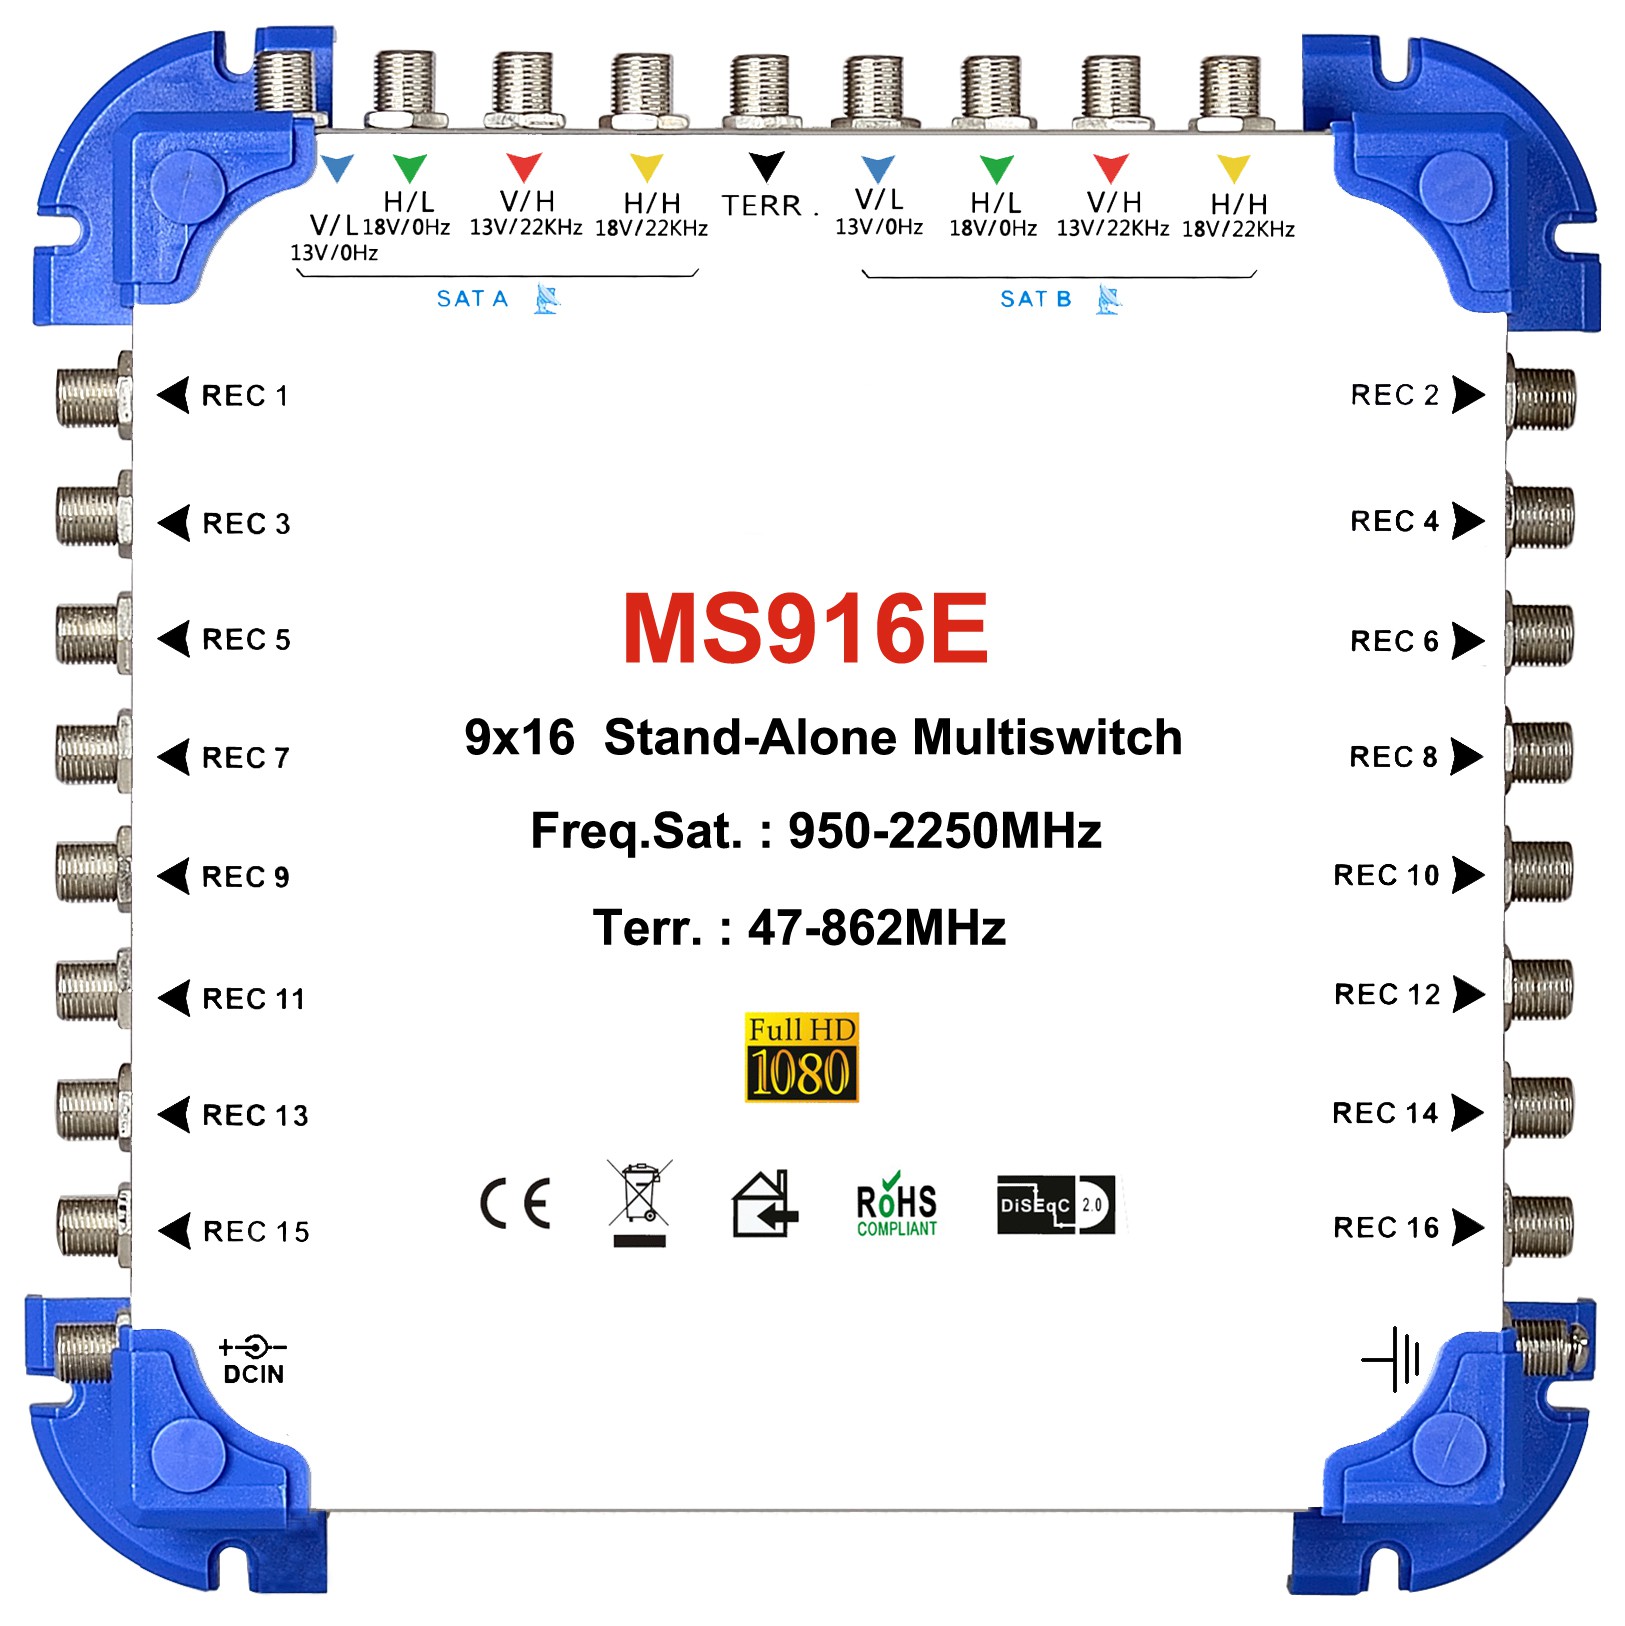 9x16  satellite multi-switch, Stand-Alone multiswitch